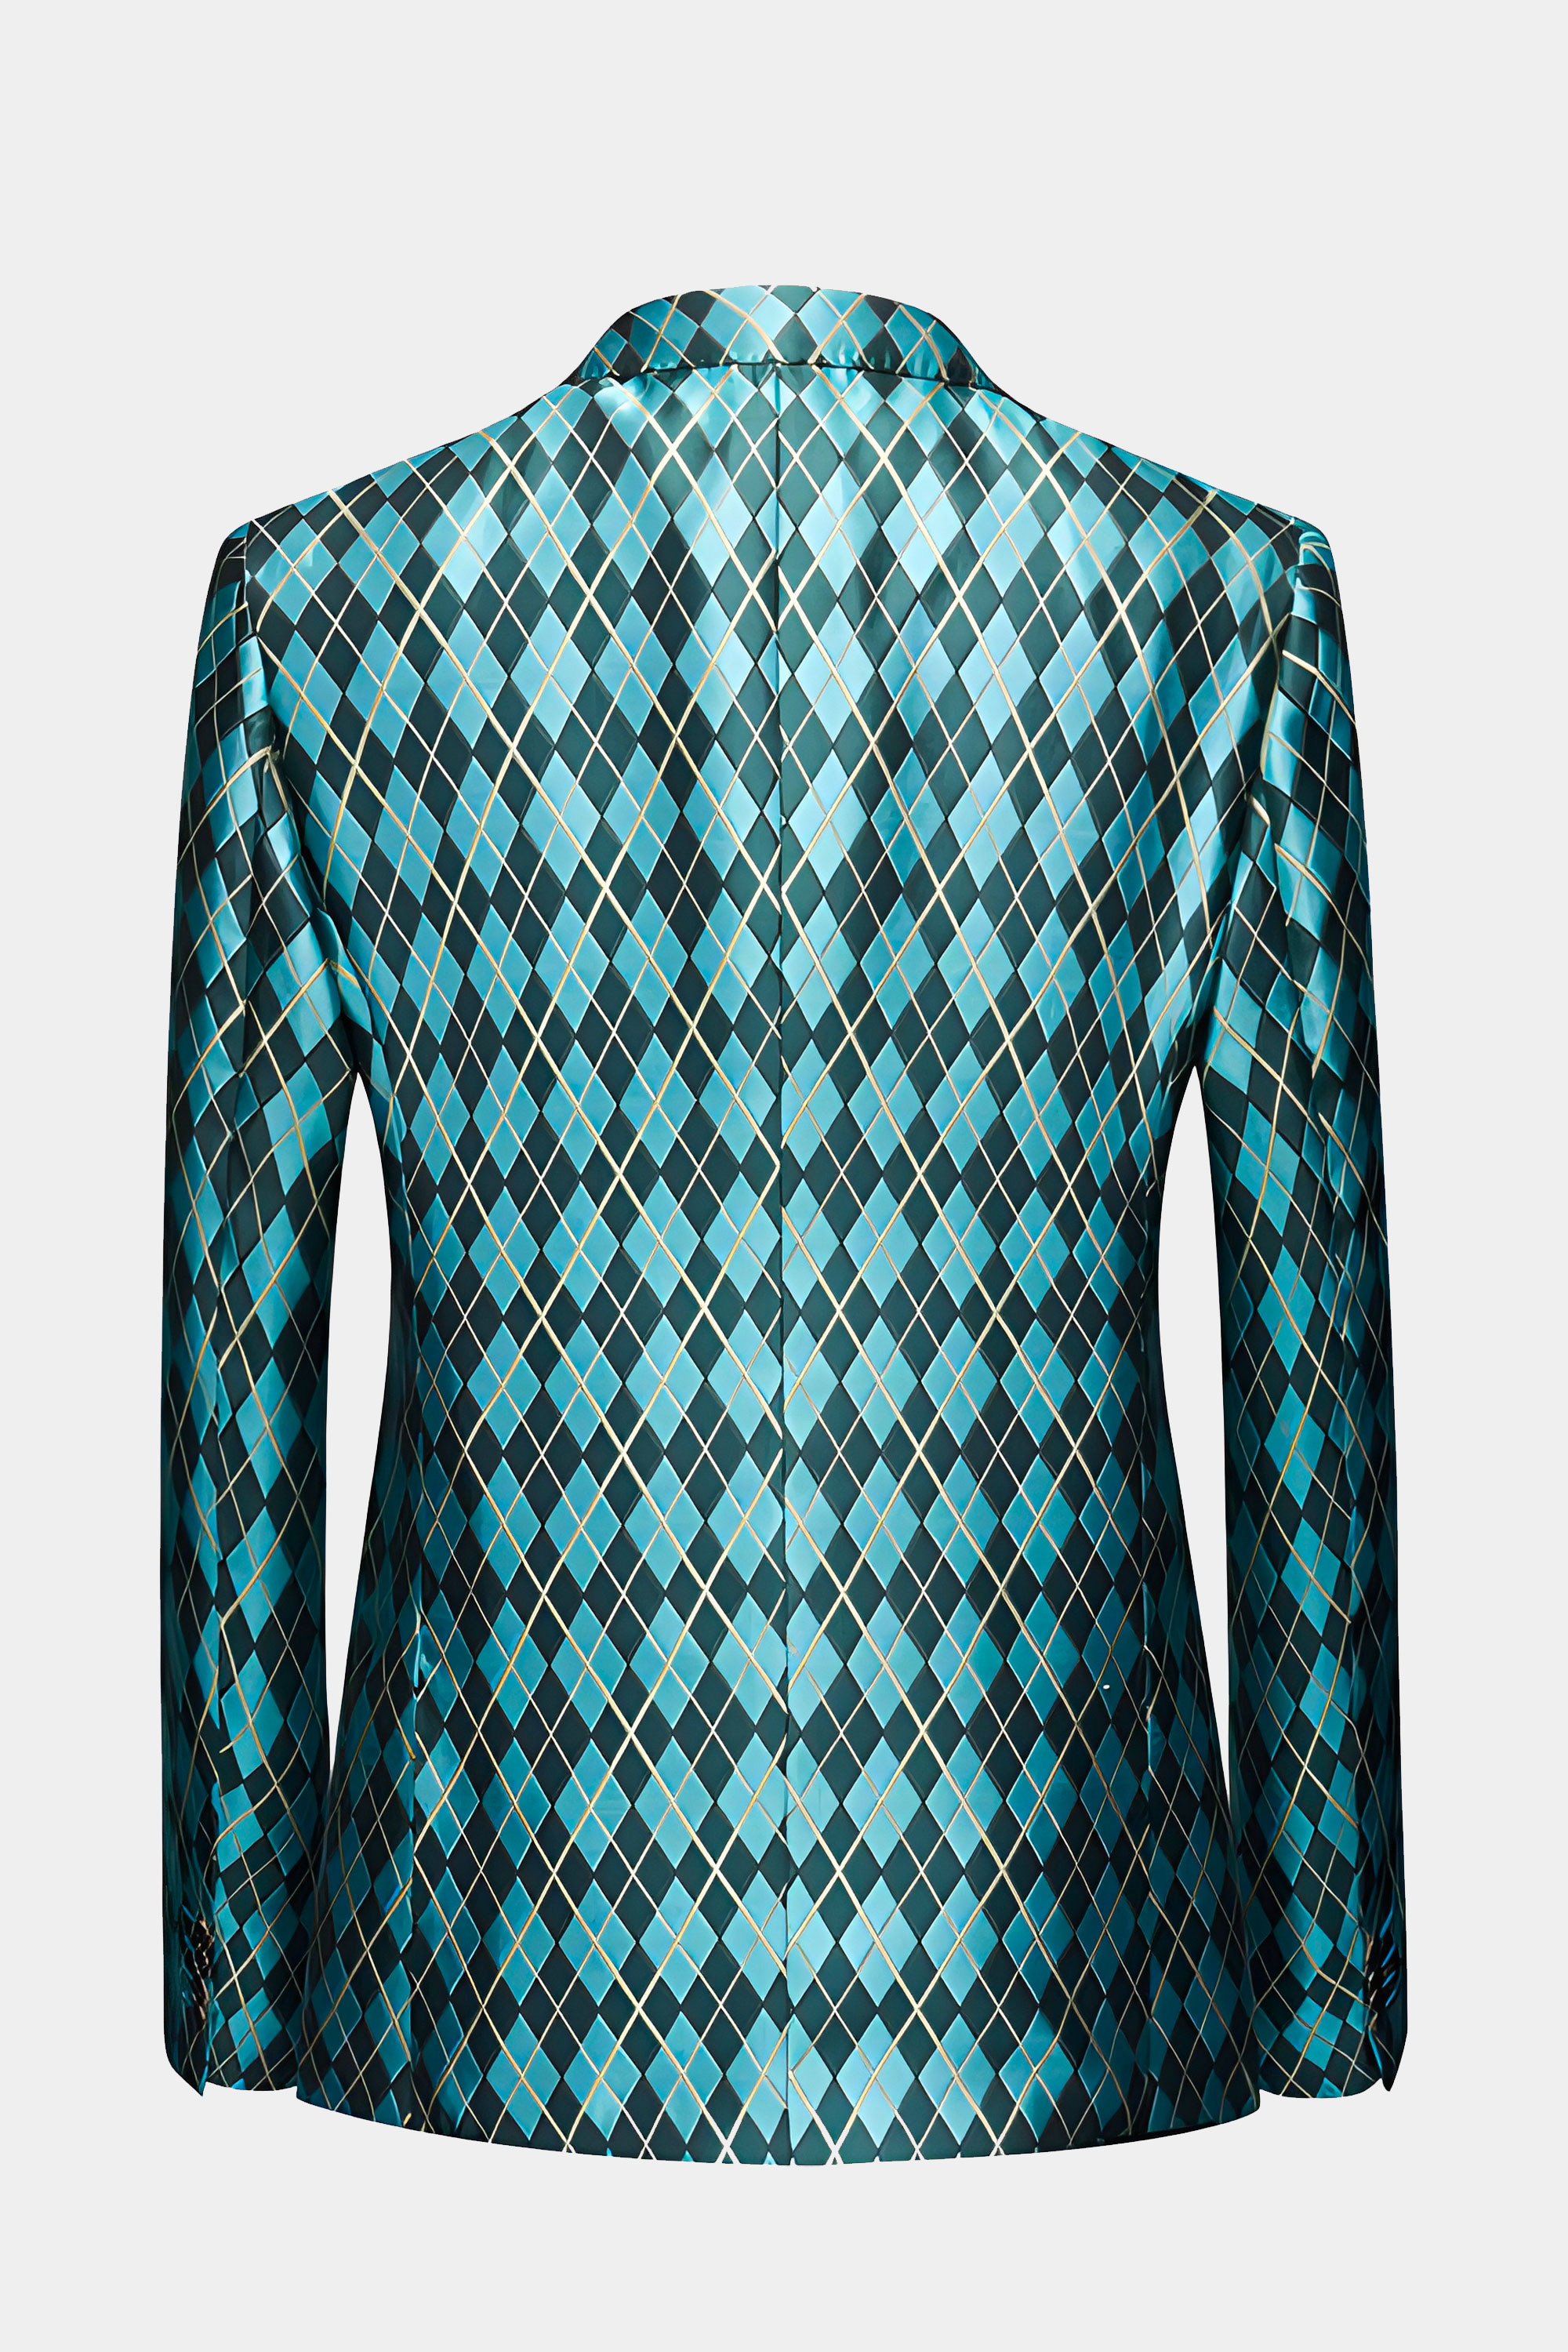 Argyle-Turquoise-Suit-Jacket-from-Gentlemansguru.com